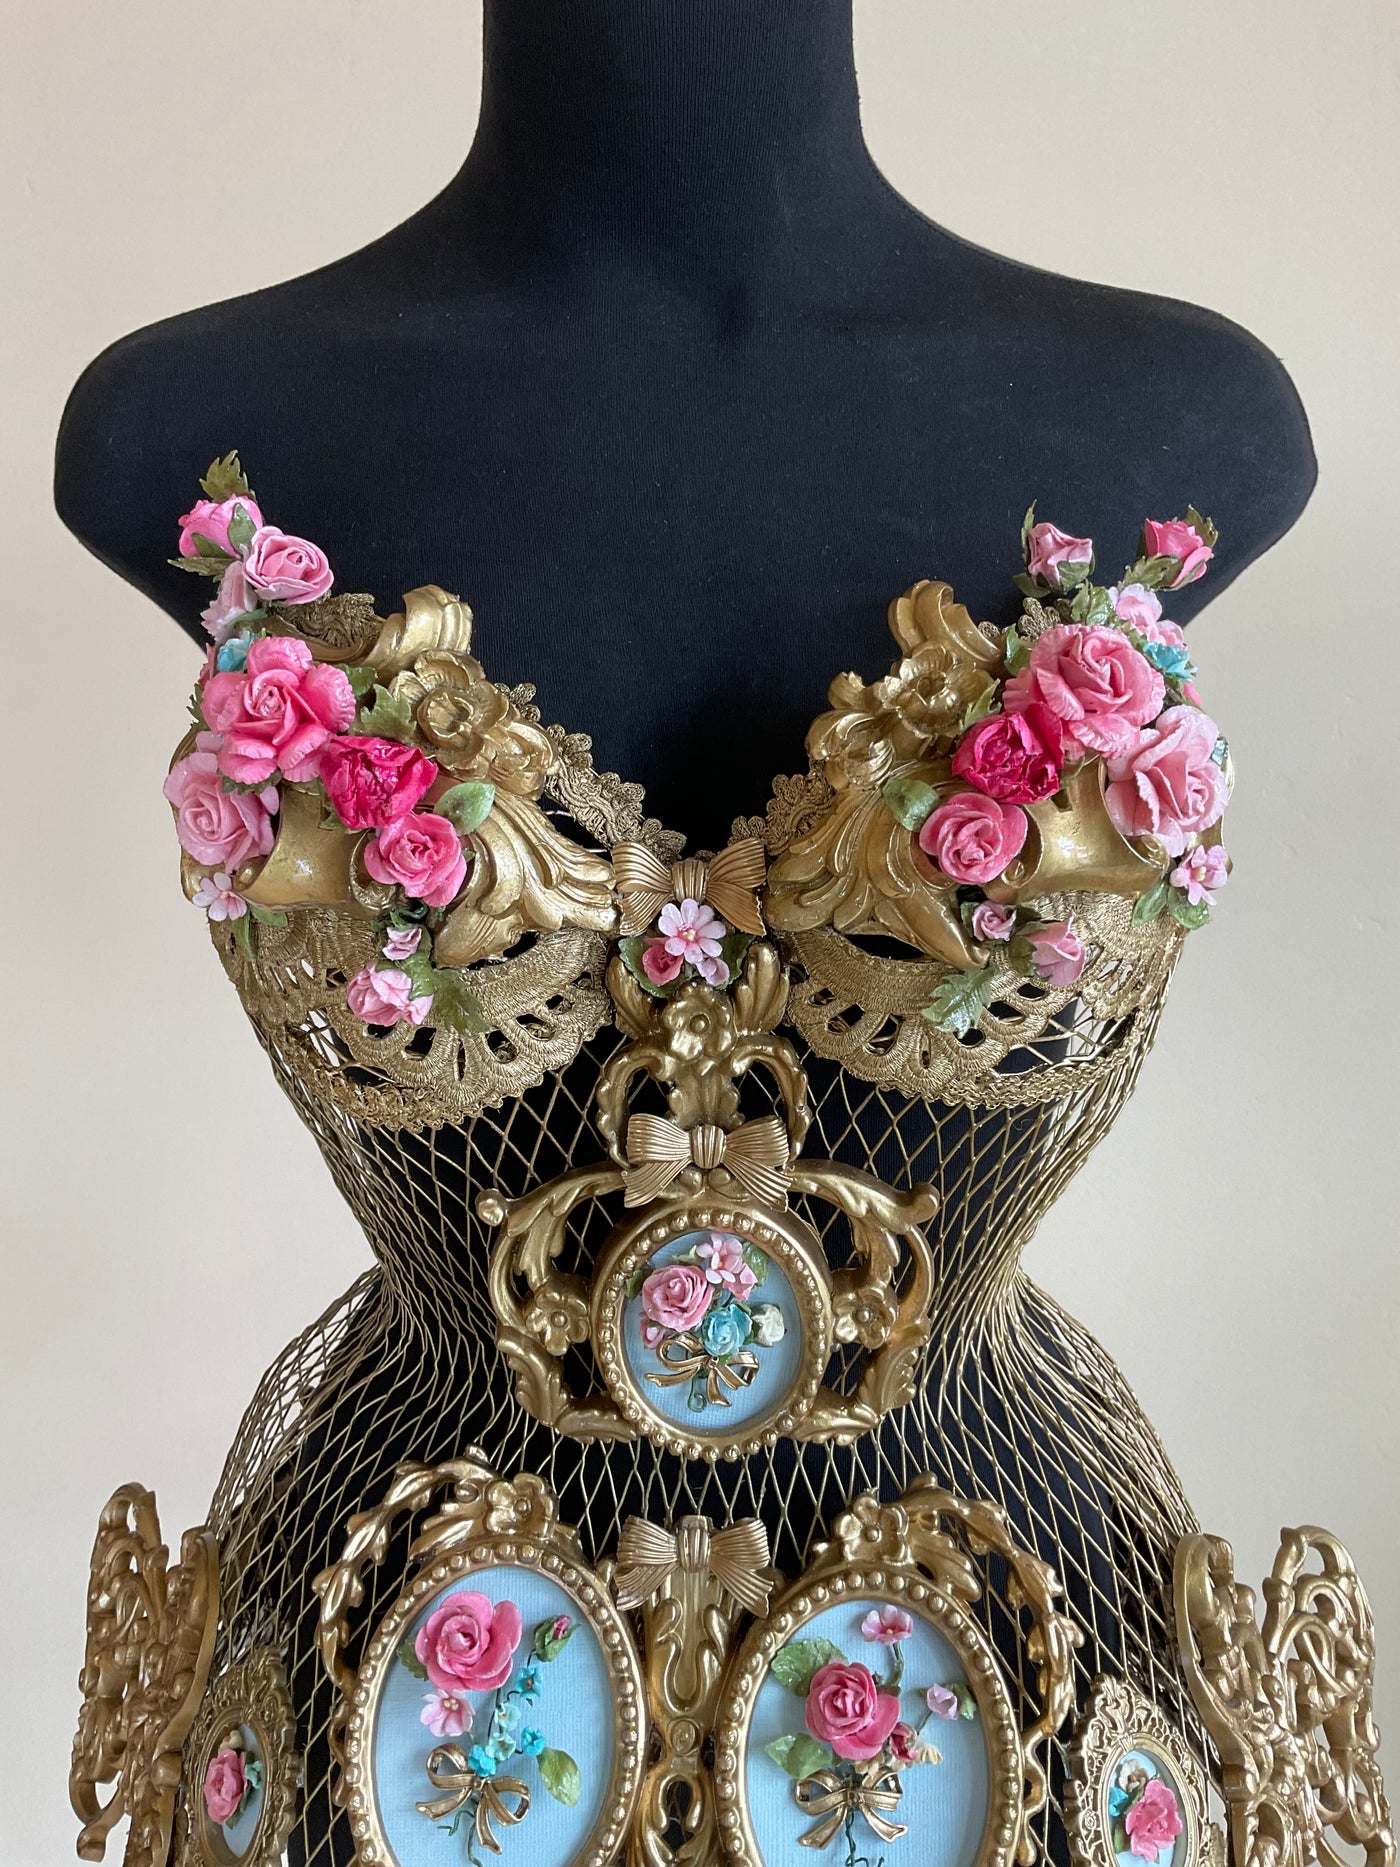 The ART of FLOWERS metal corset